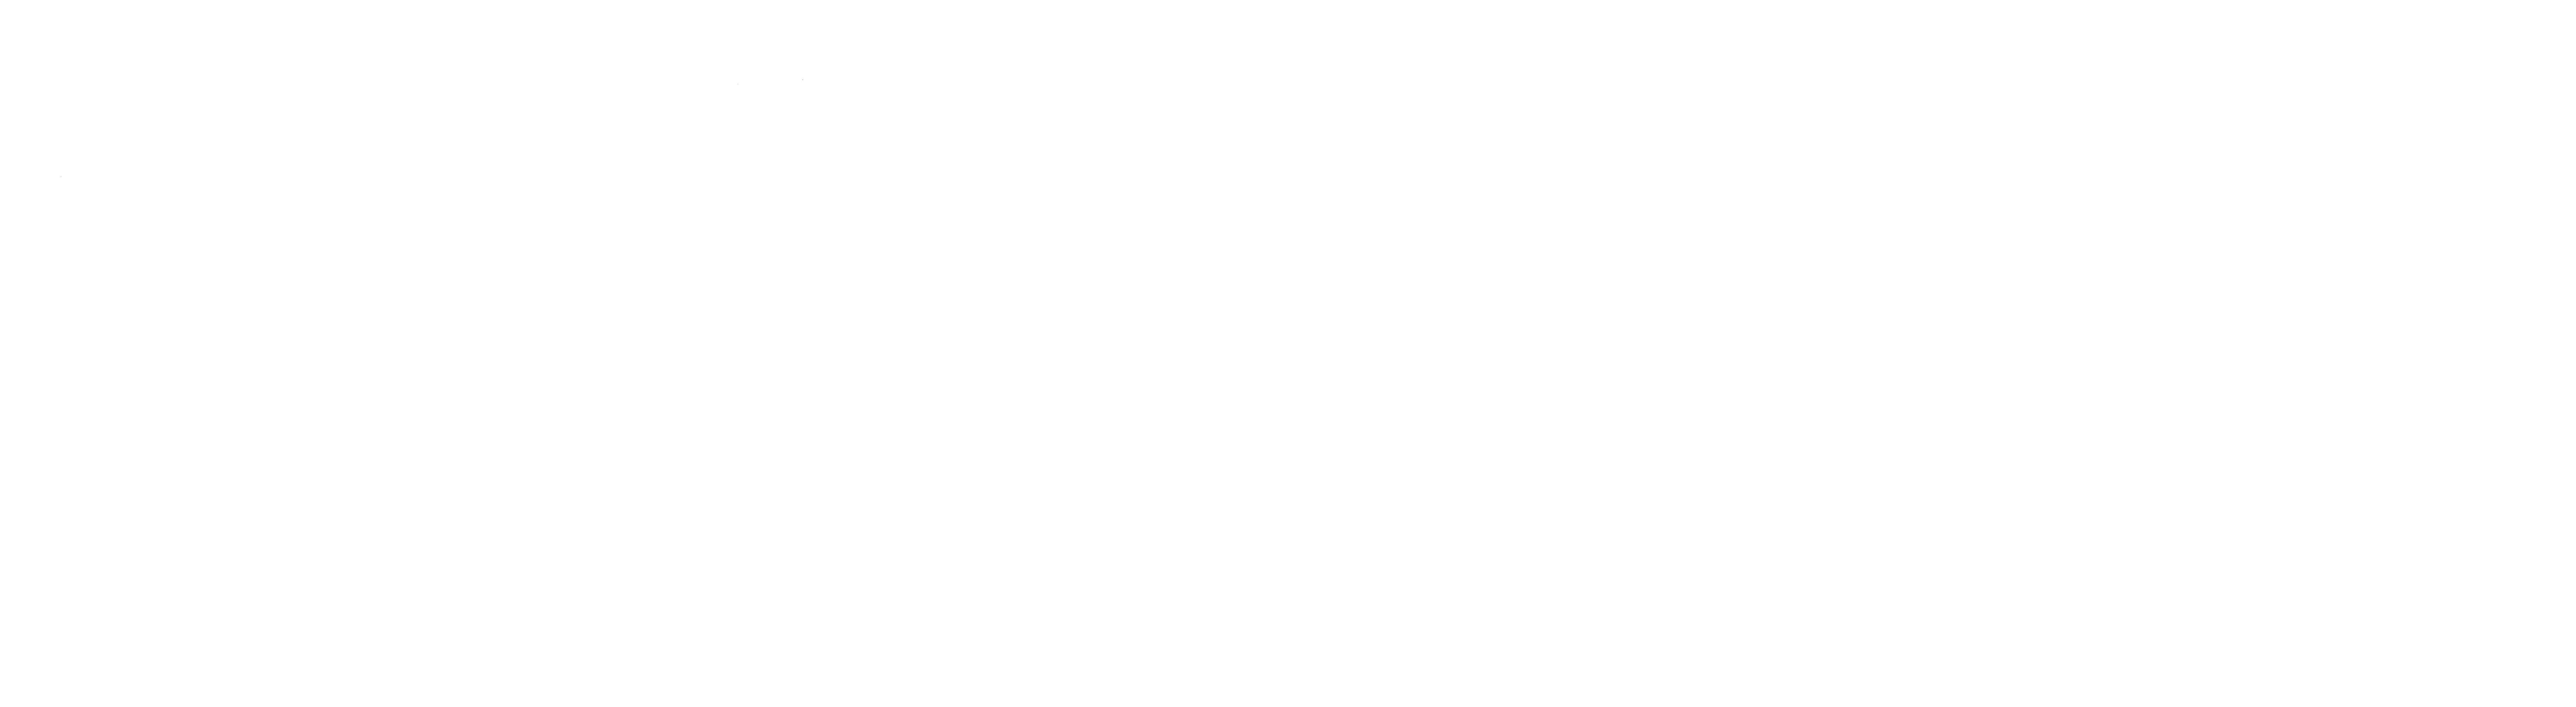 NUDES Dive Club